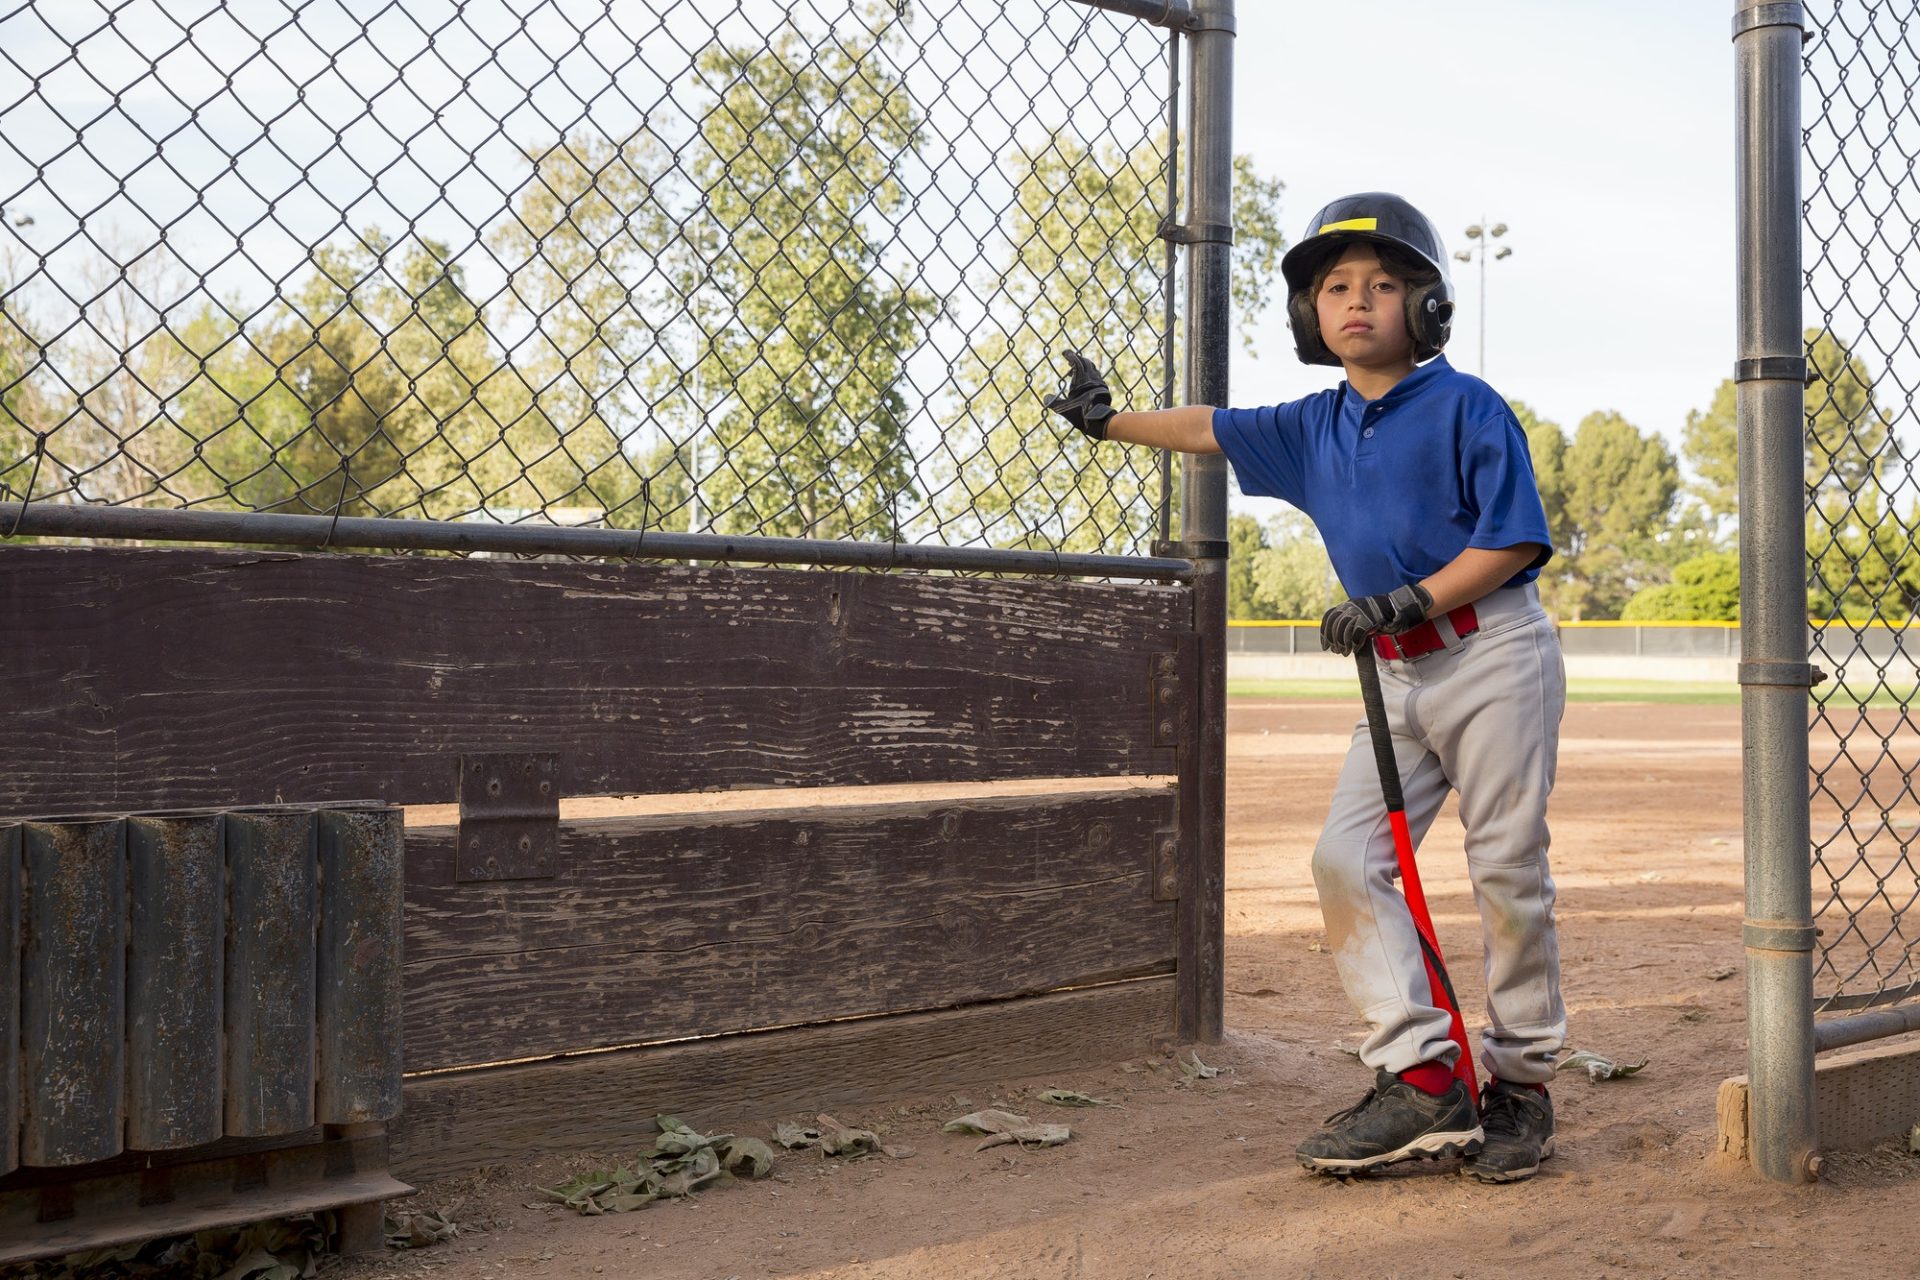 7 years old baseball player